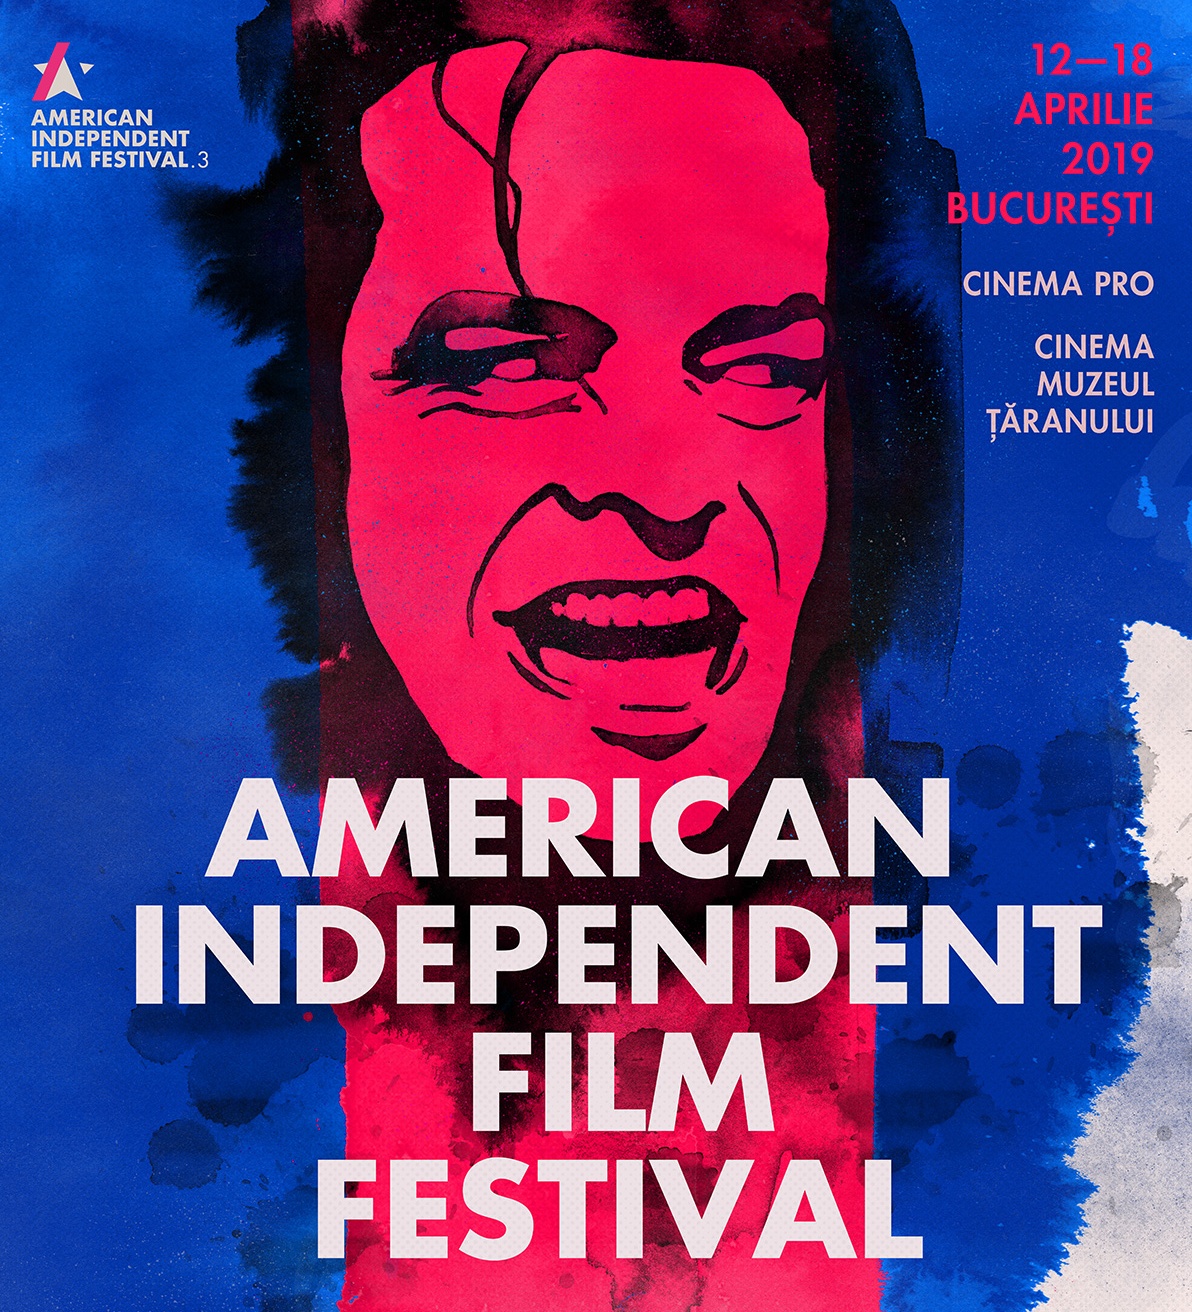 american-independent-film-festival-doneaz-toate-ncas-rile-din-bilete-c-tre-casa-share-europa-fm